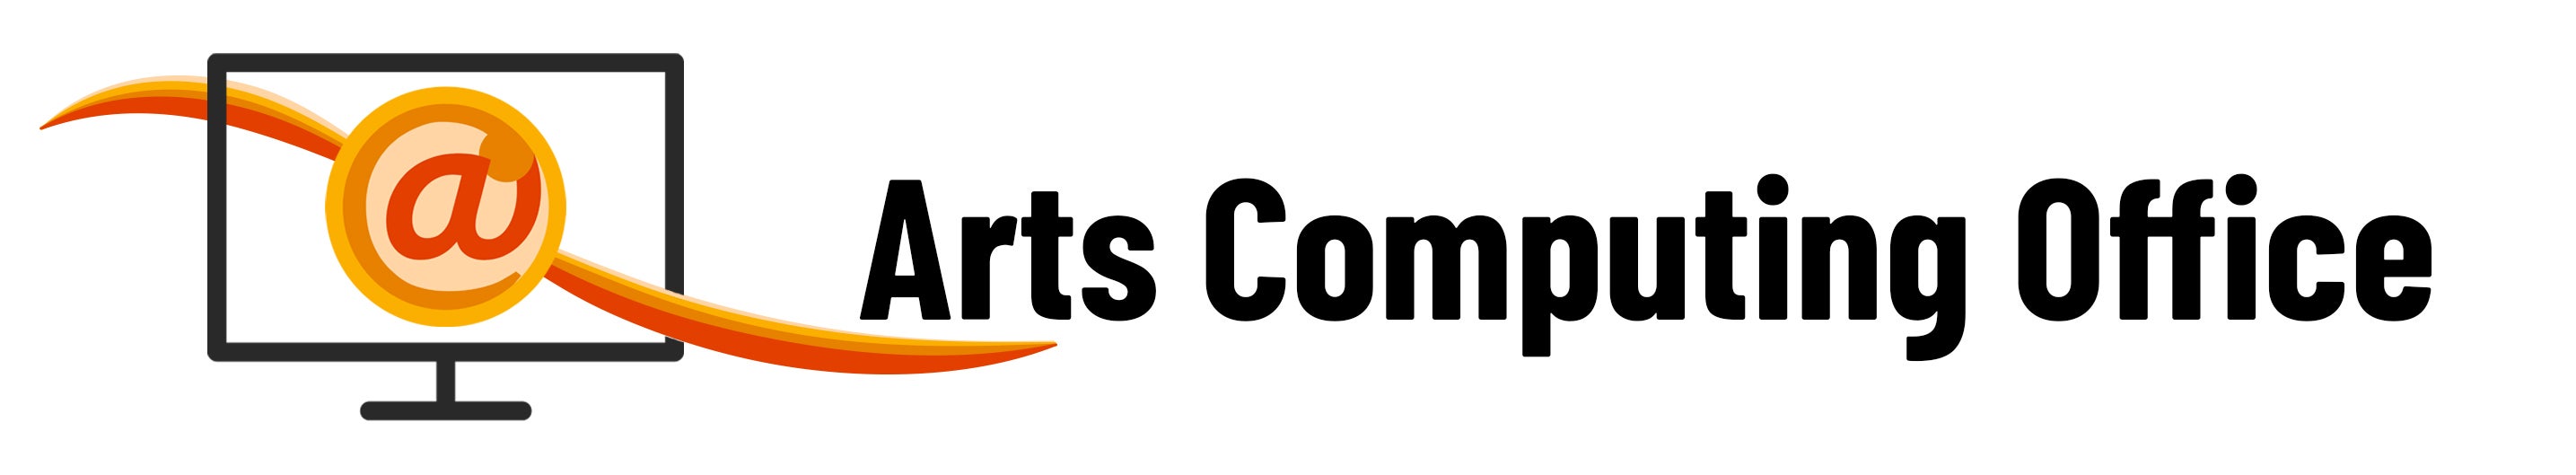 Arts Computing Office Logo